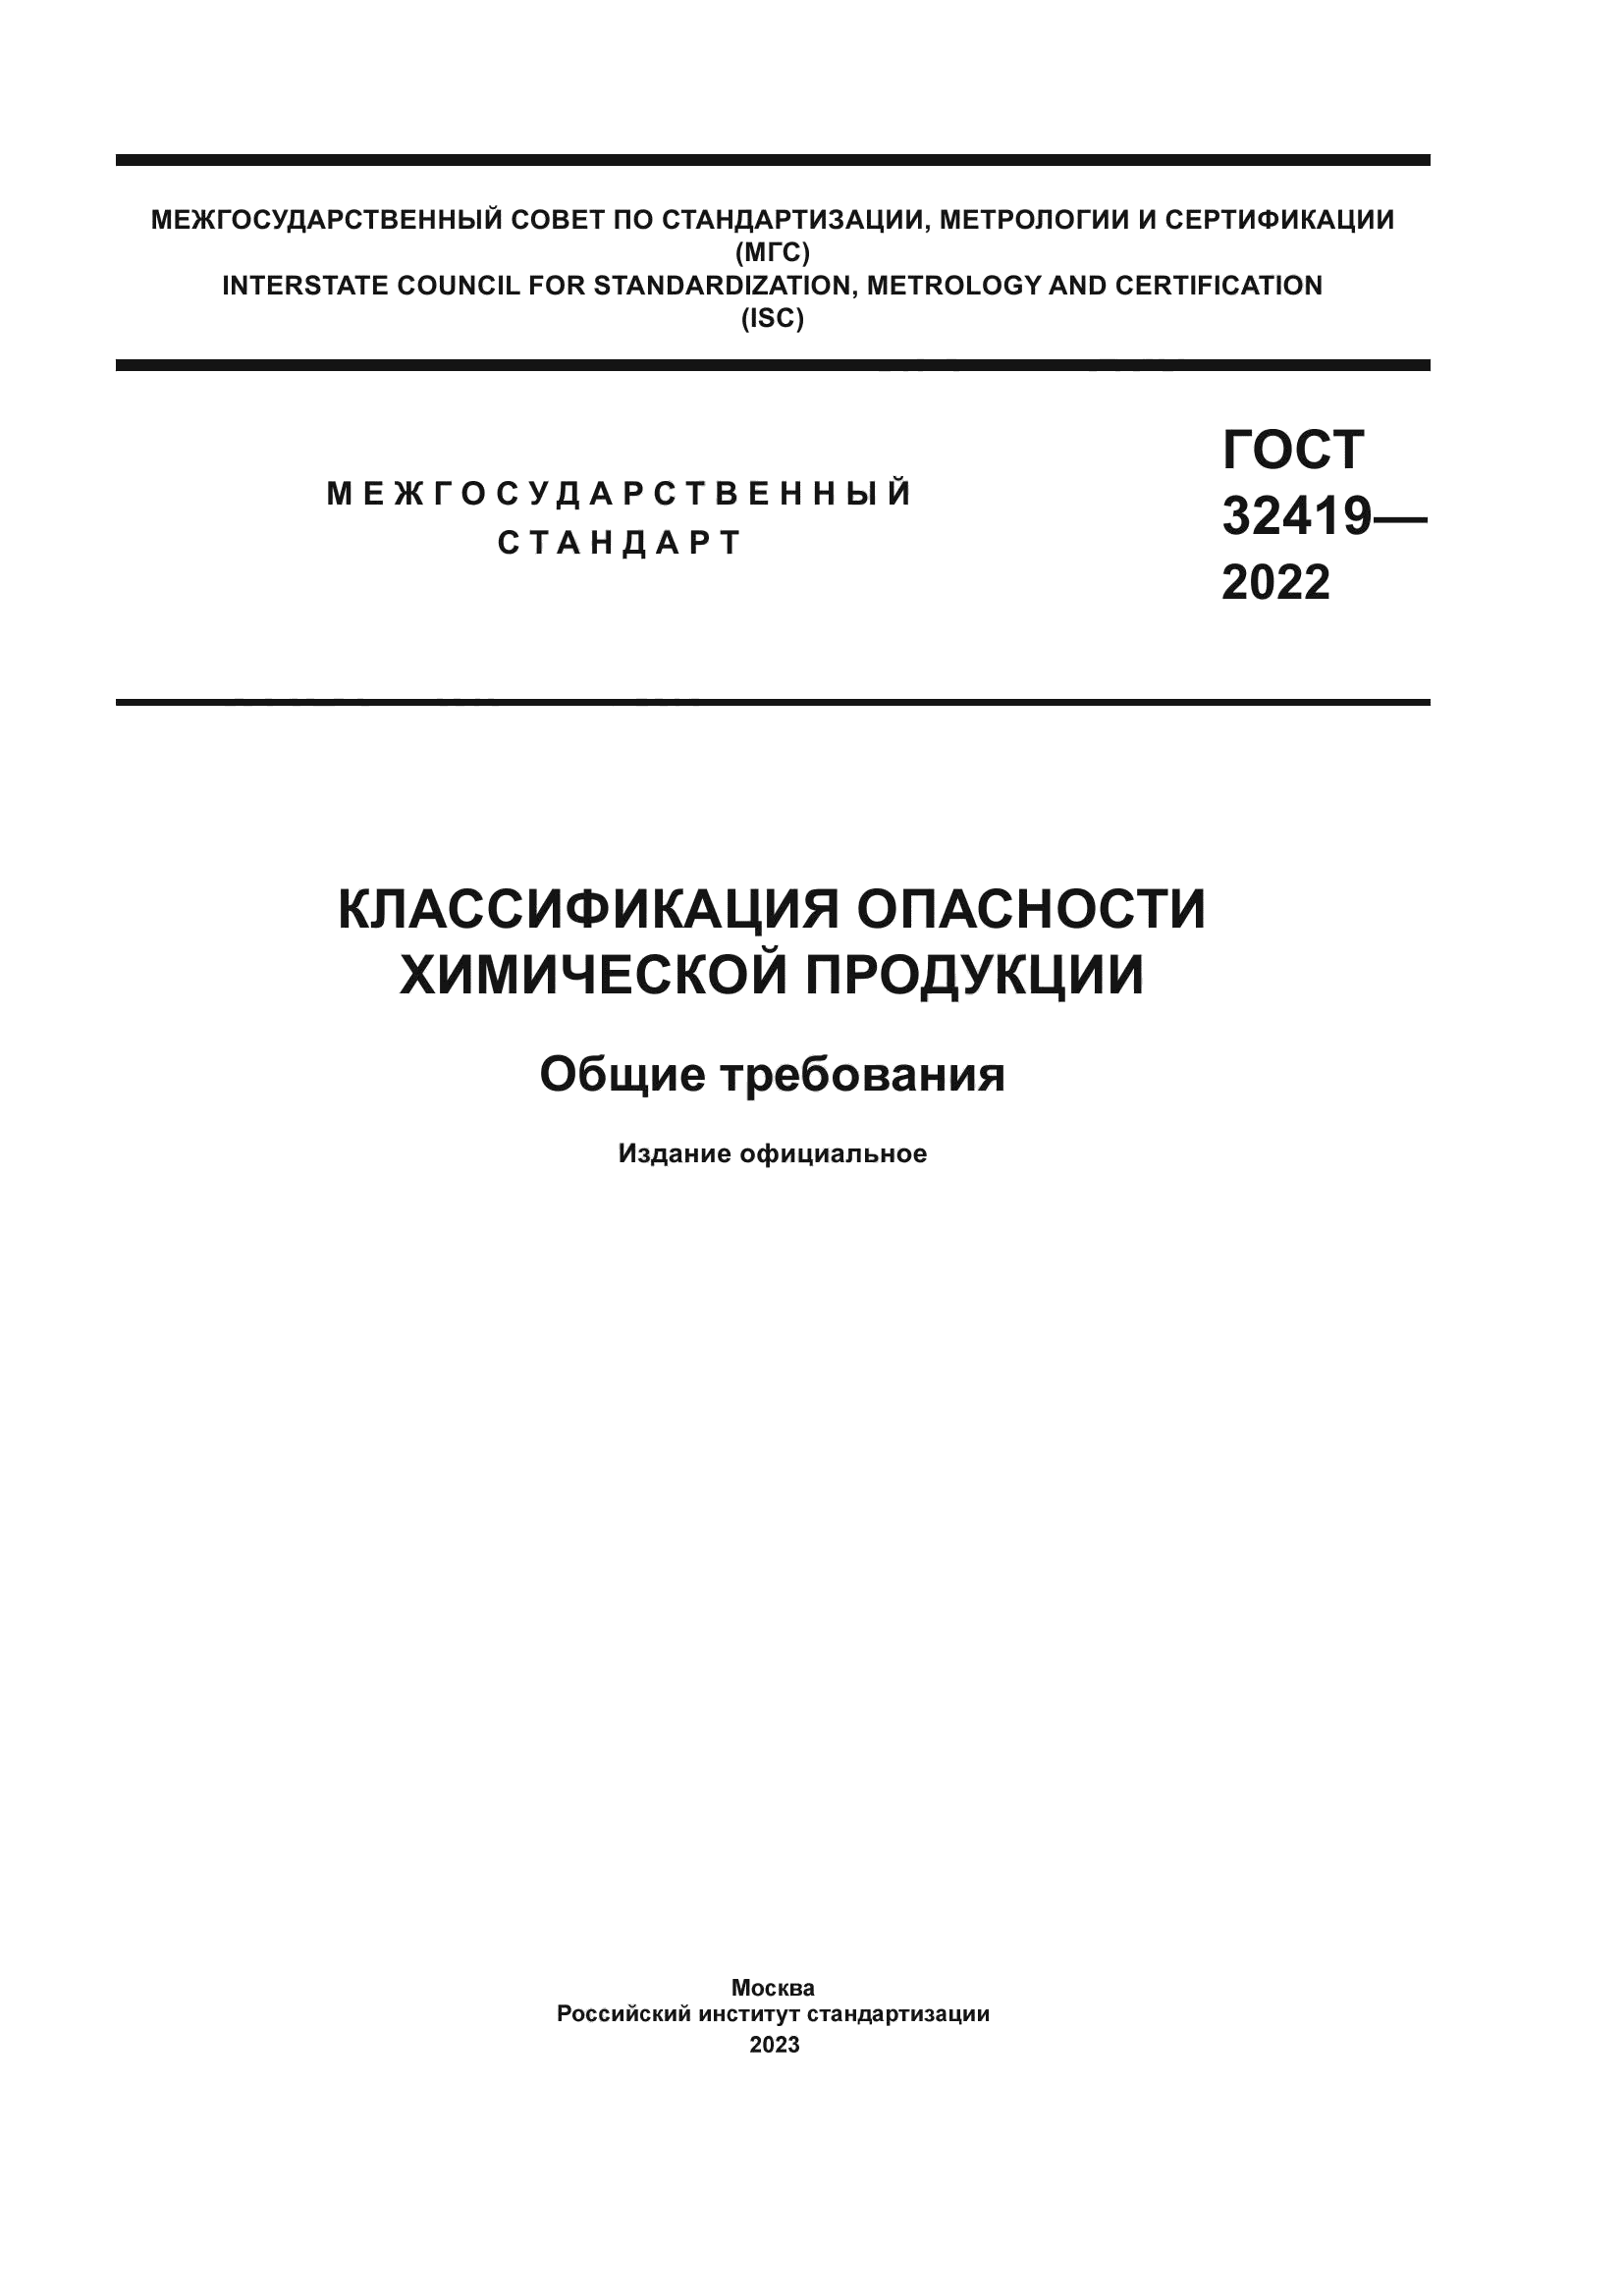 ГОСТ 32419-2022